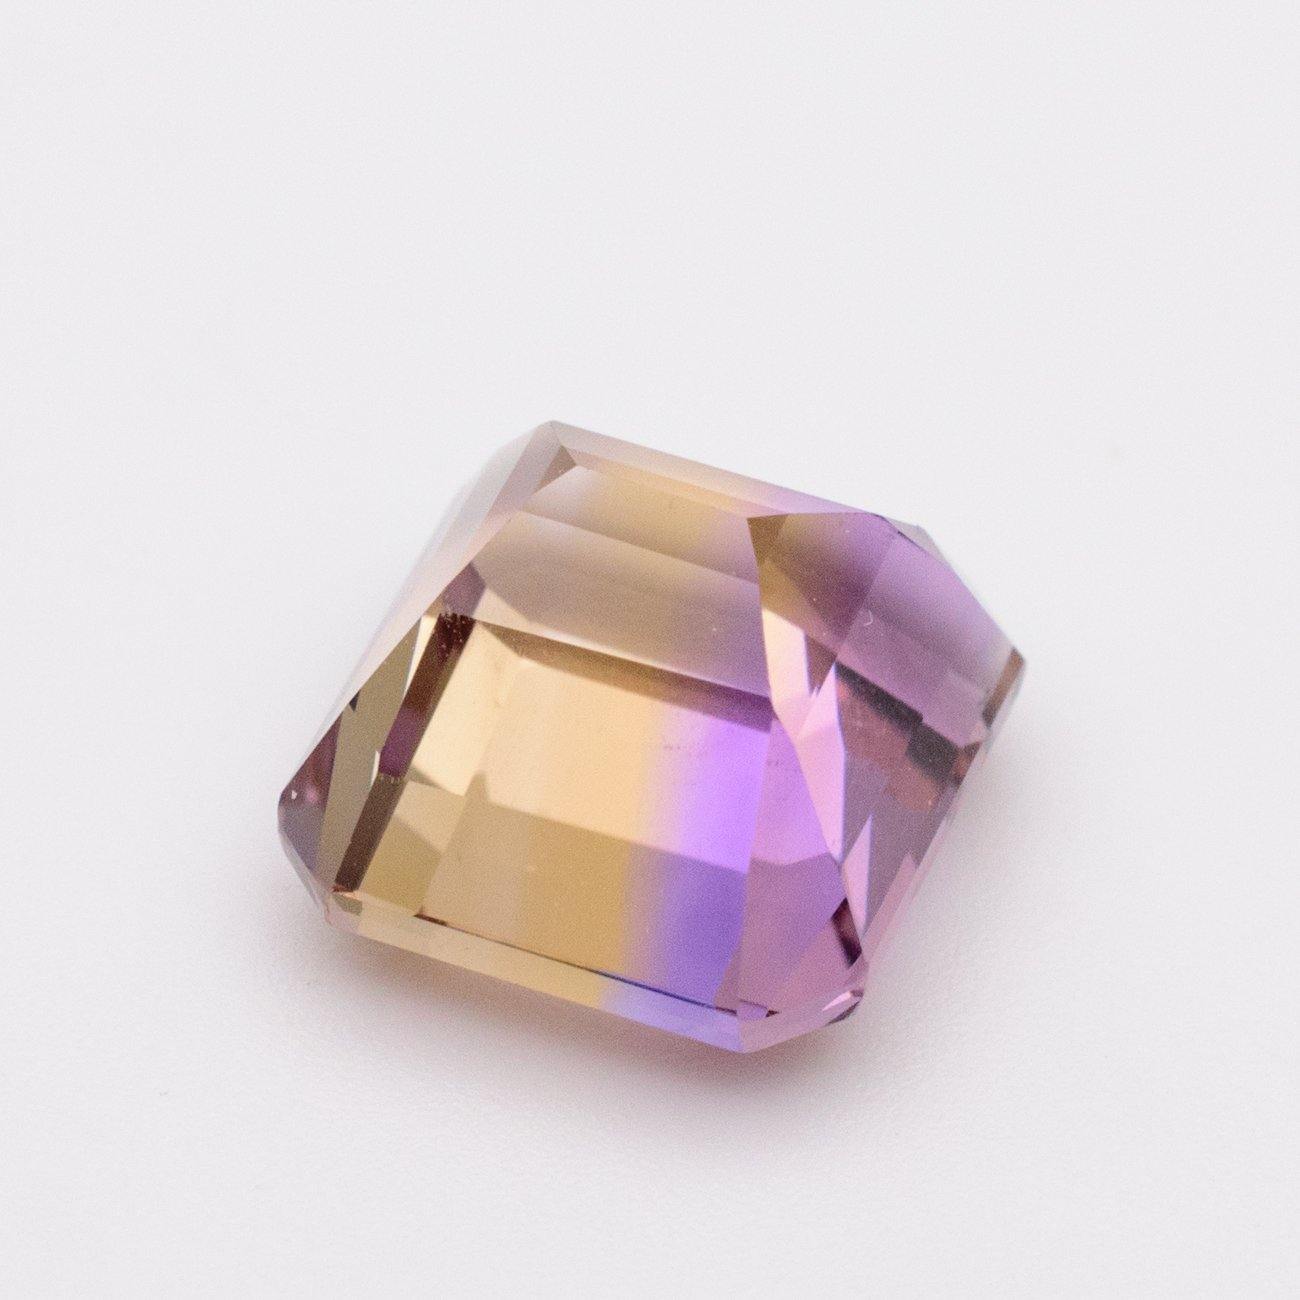 7.02 Carats Natural Ametrine Emerald Cut Loose Gemstone - Modern Gem Jewelry 